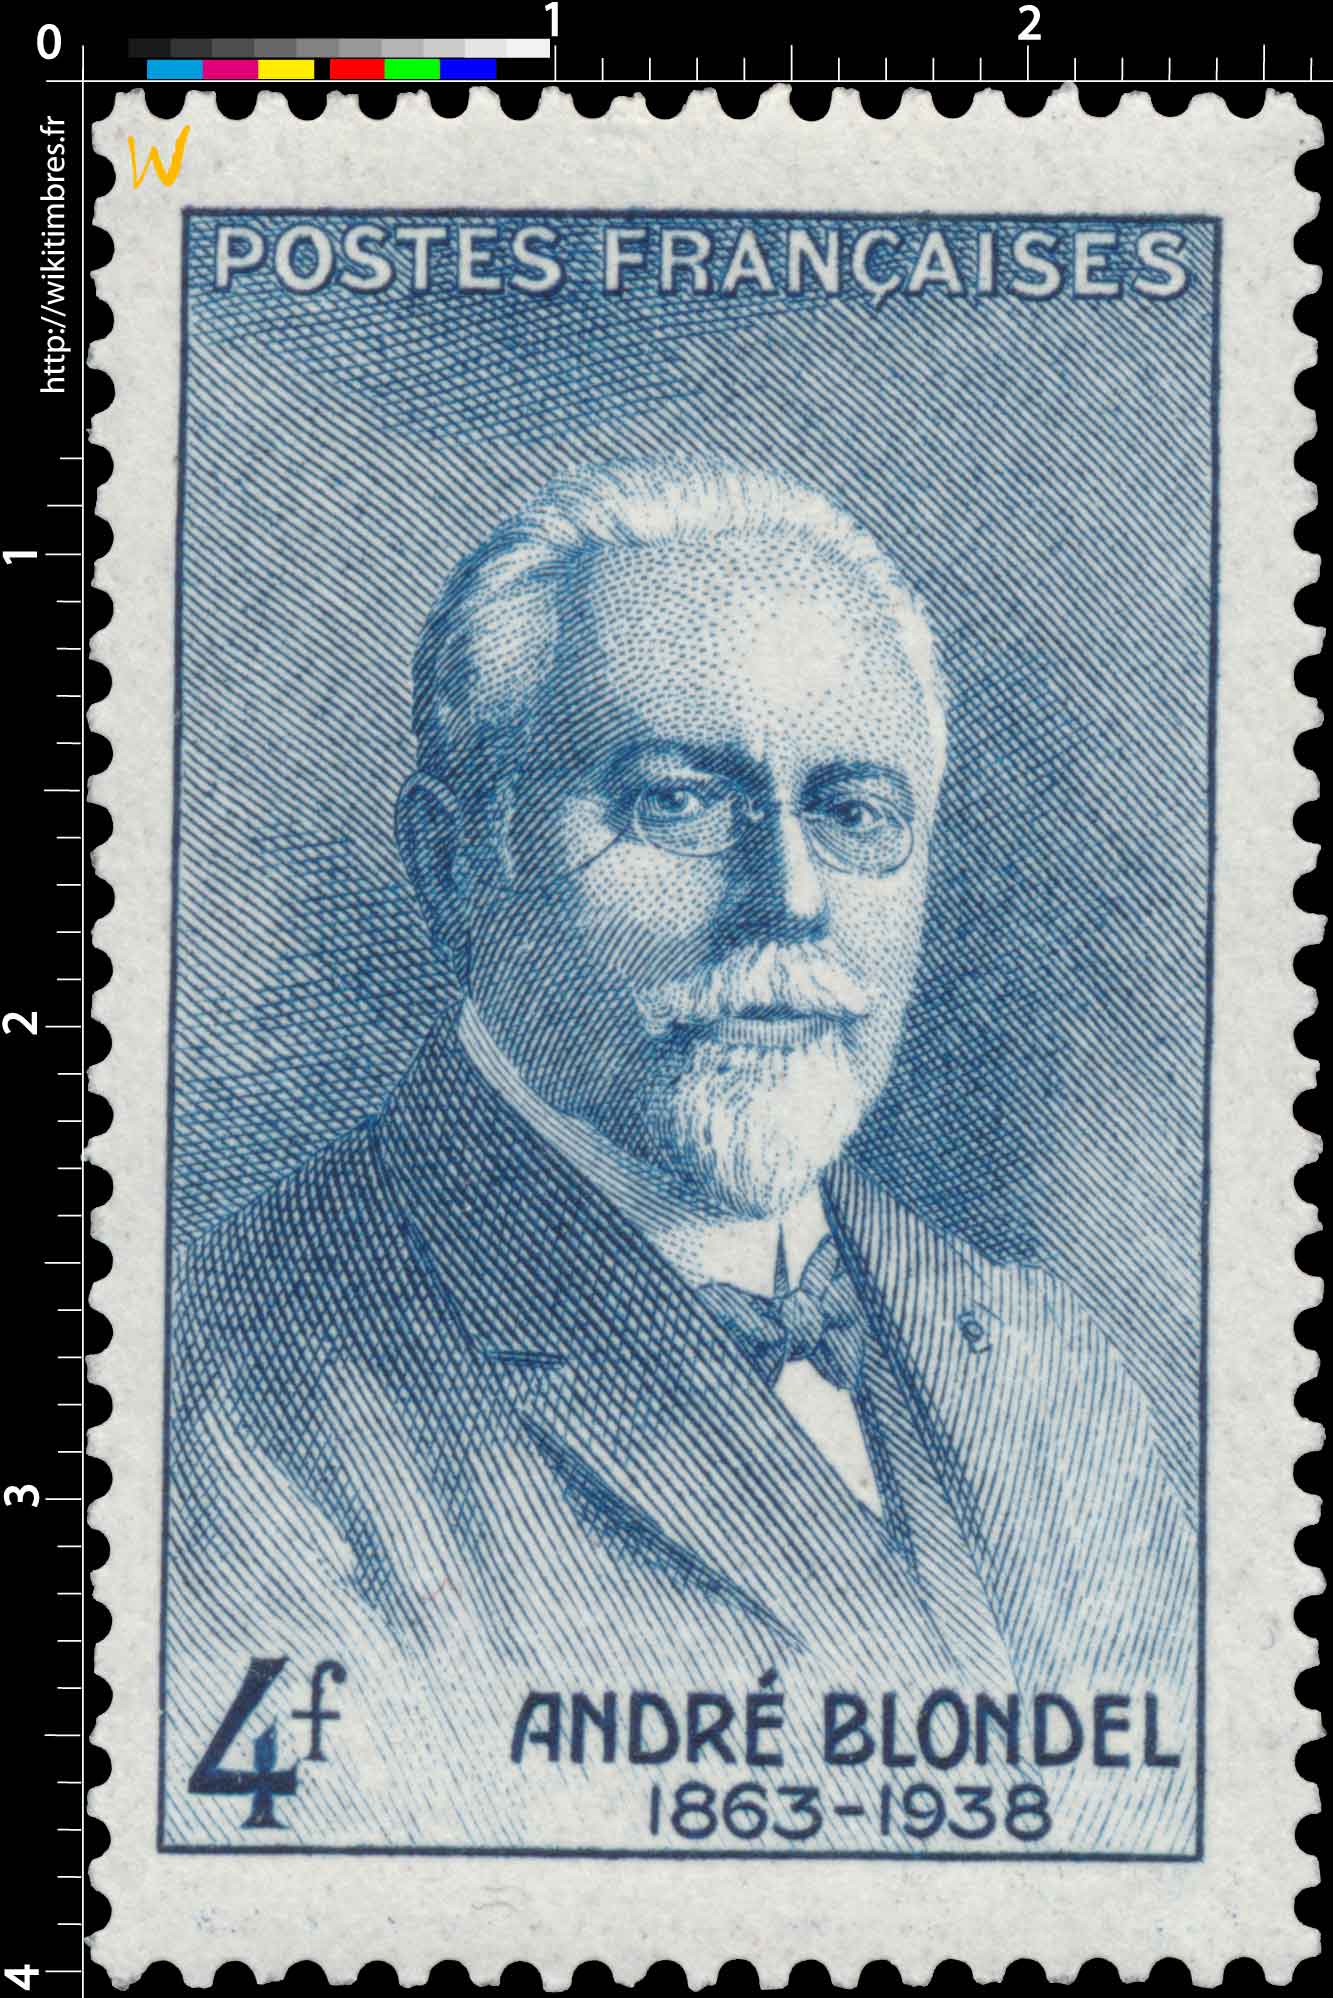 ANDRÉ BLONDEL 1863-1938